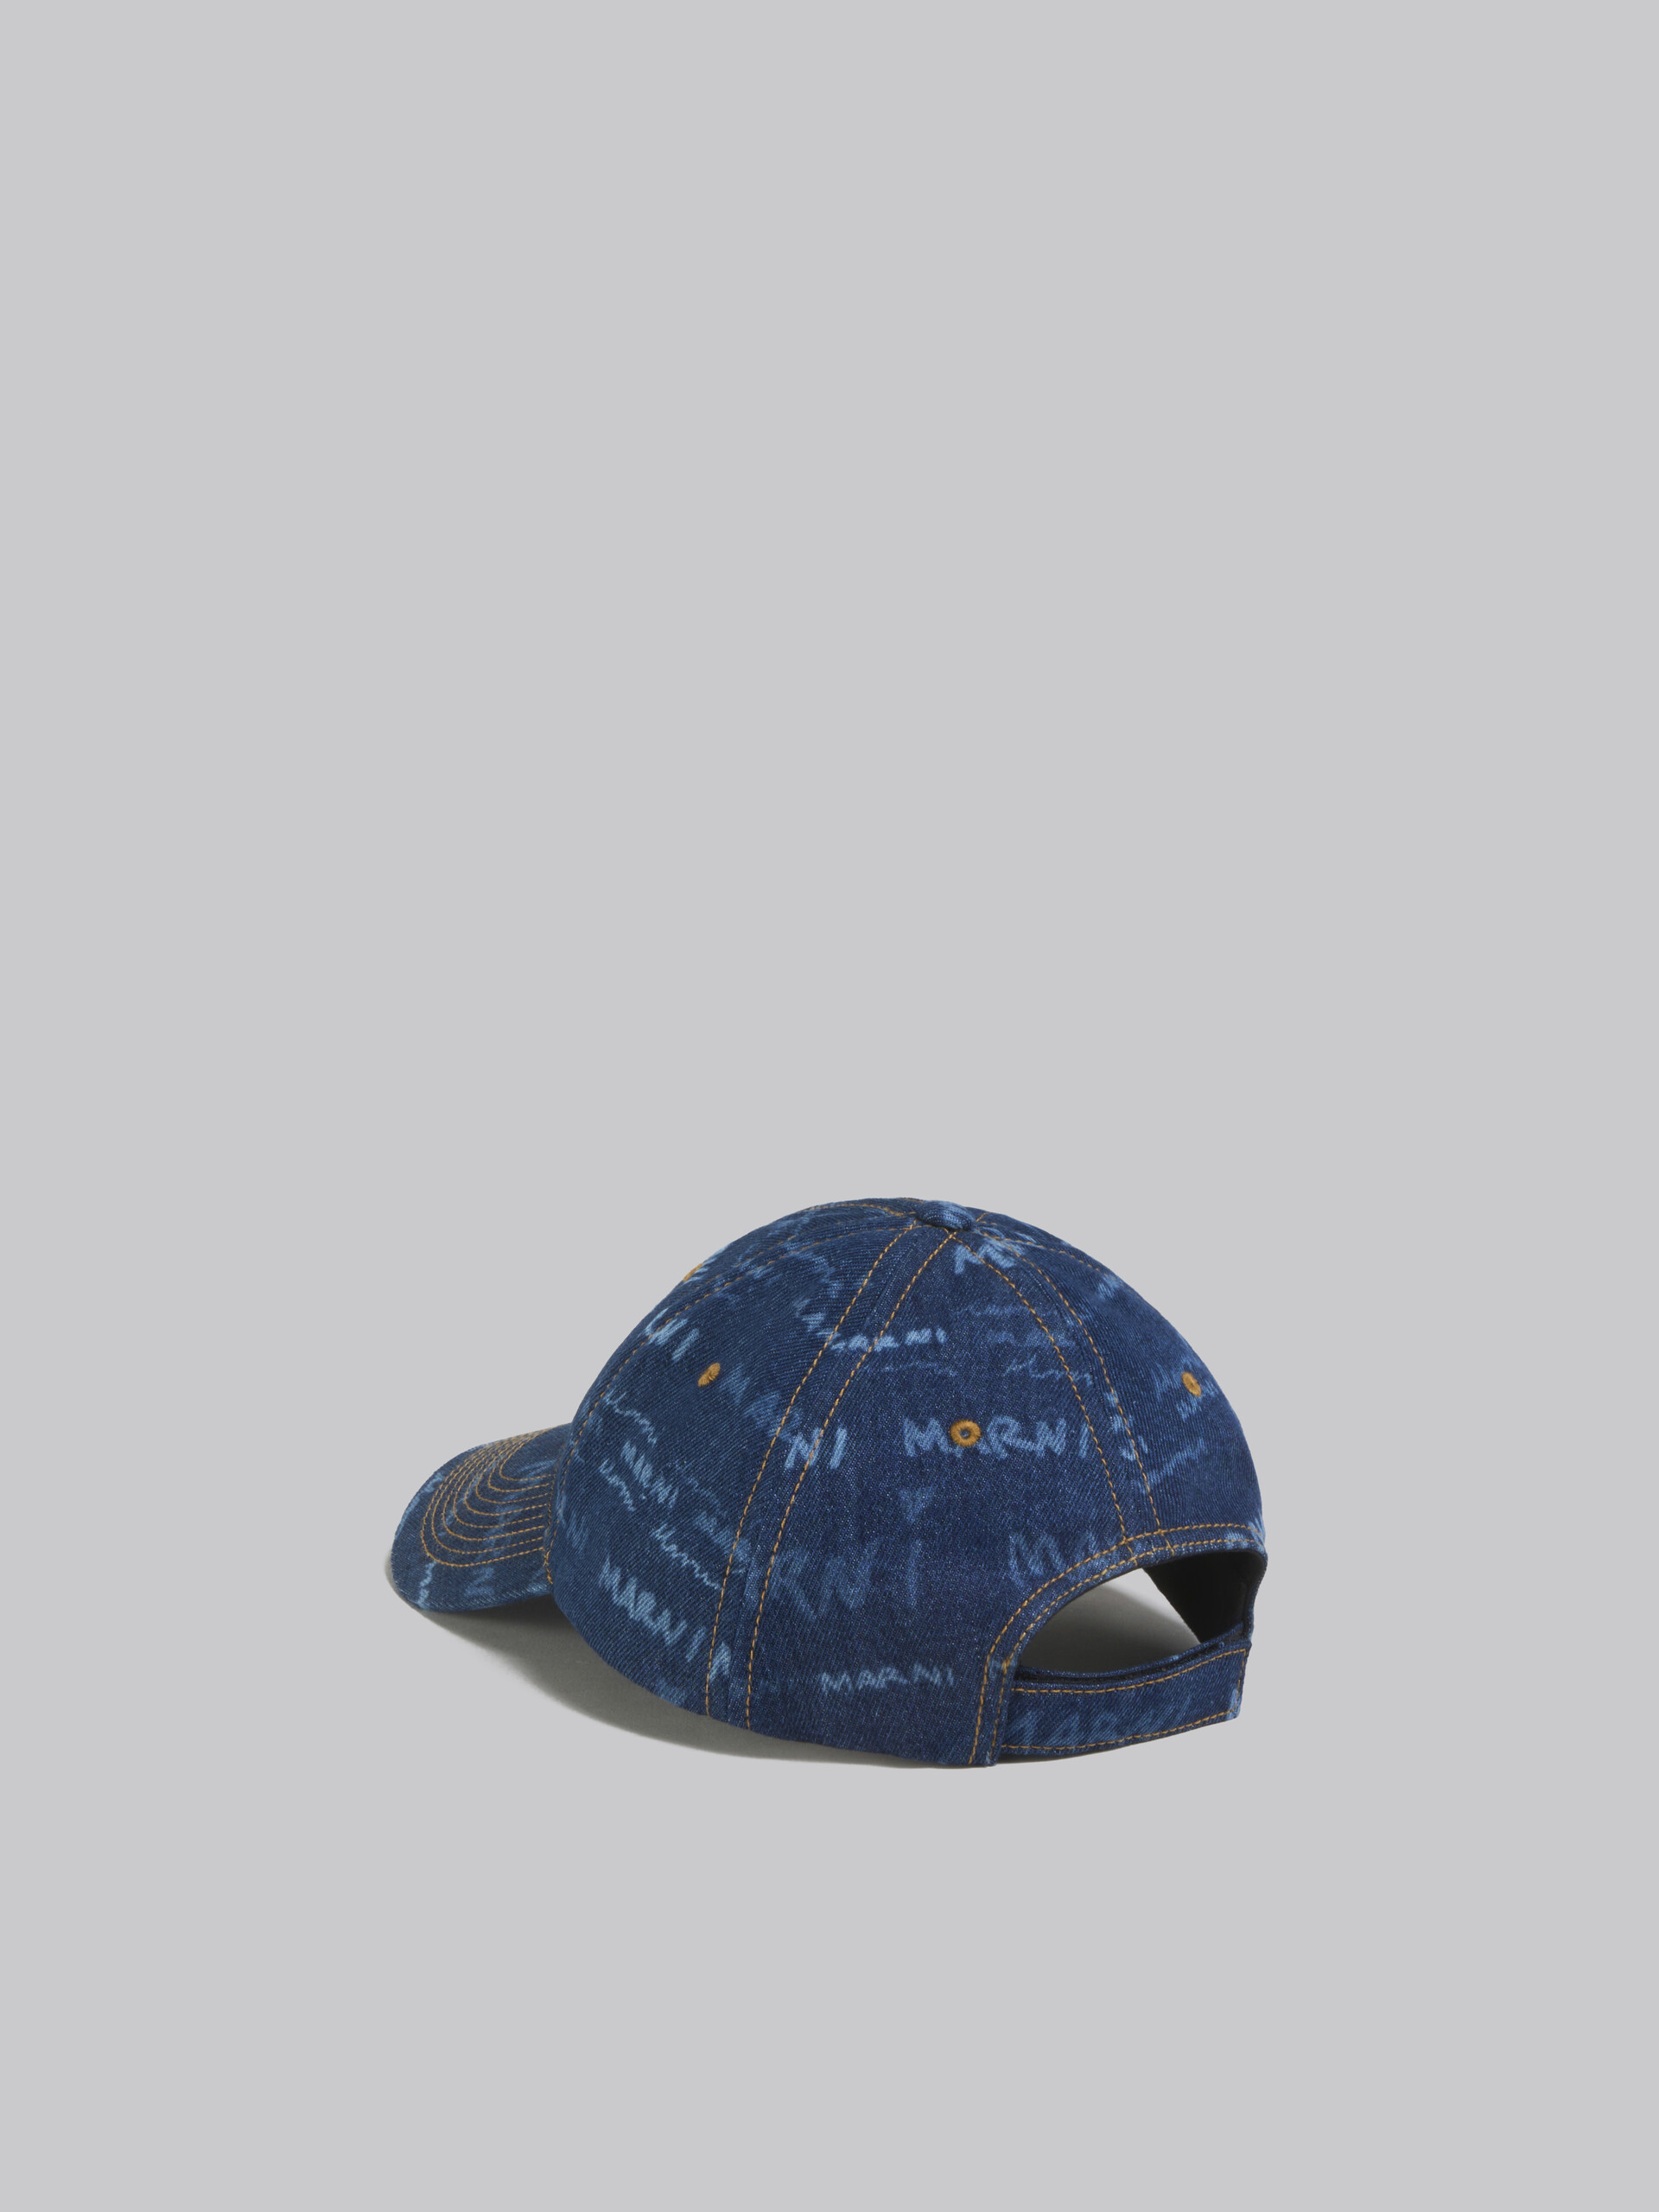 Blue denim baseball cap with Mega Marni motif - Hats - Image 3